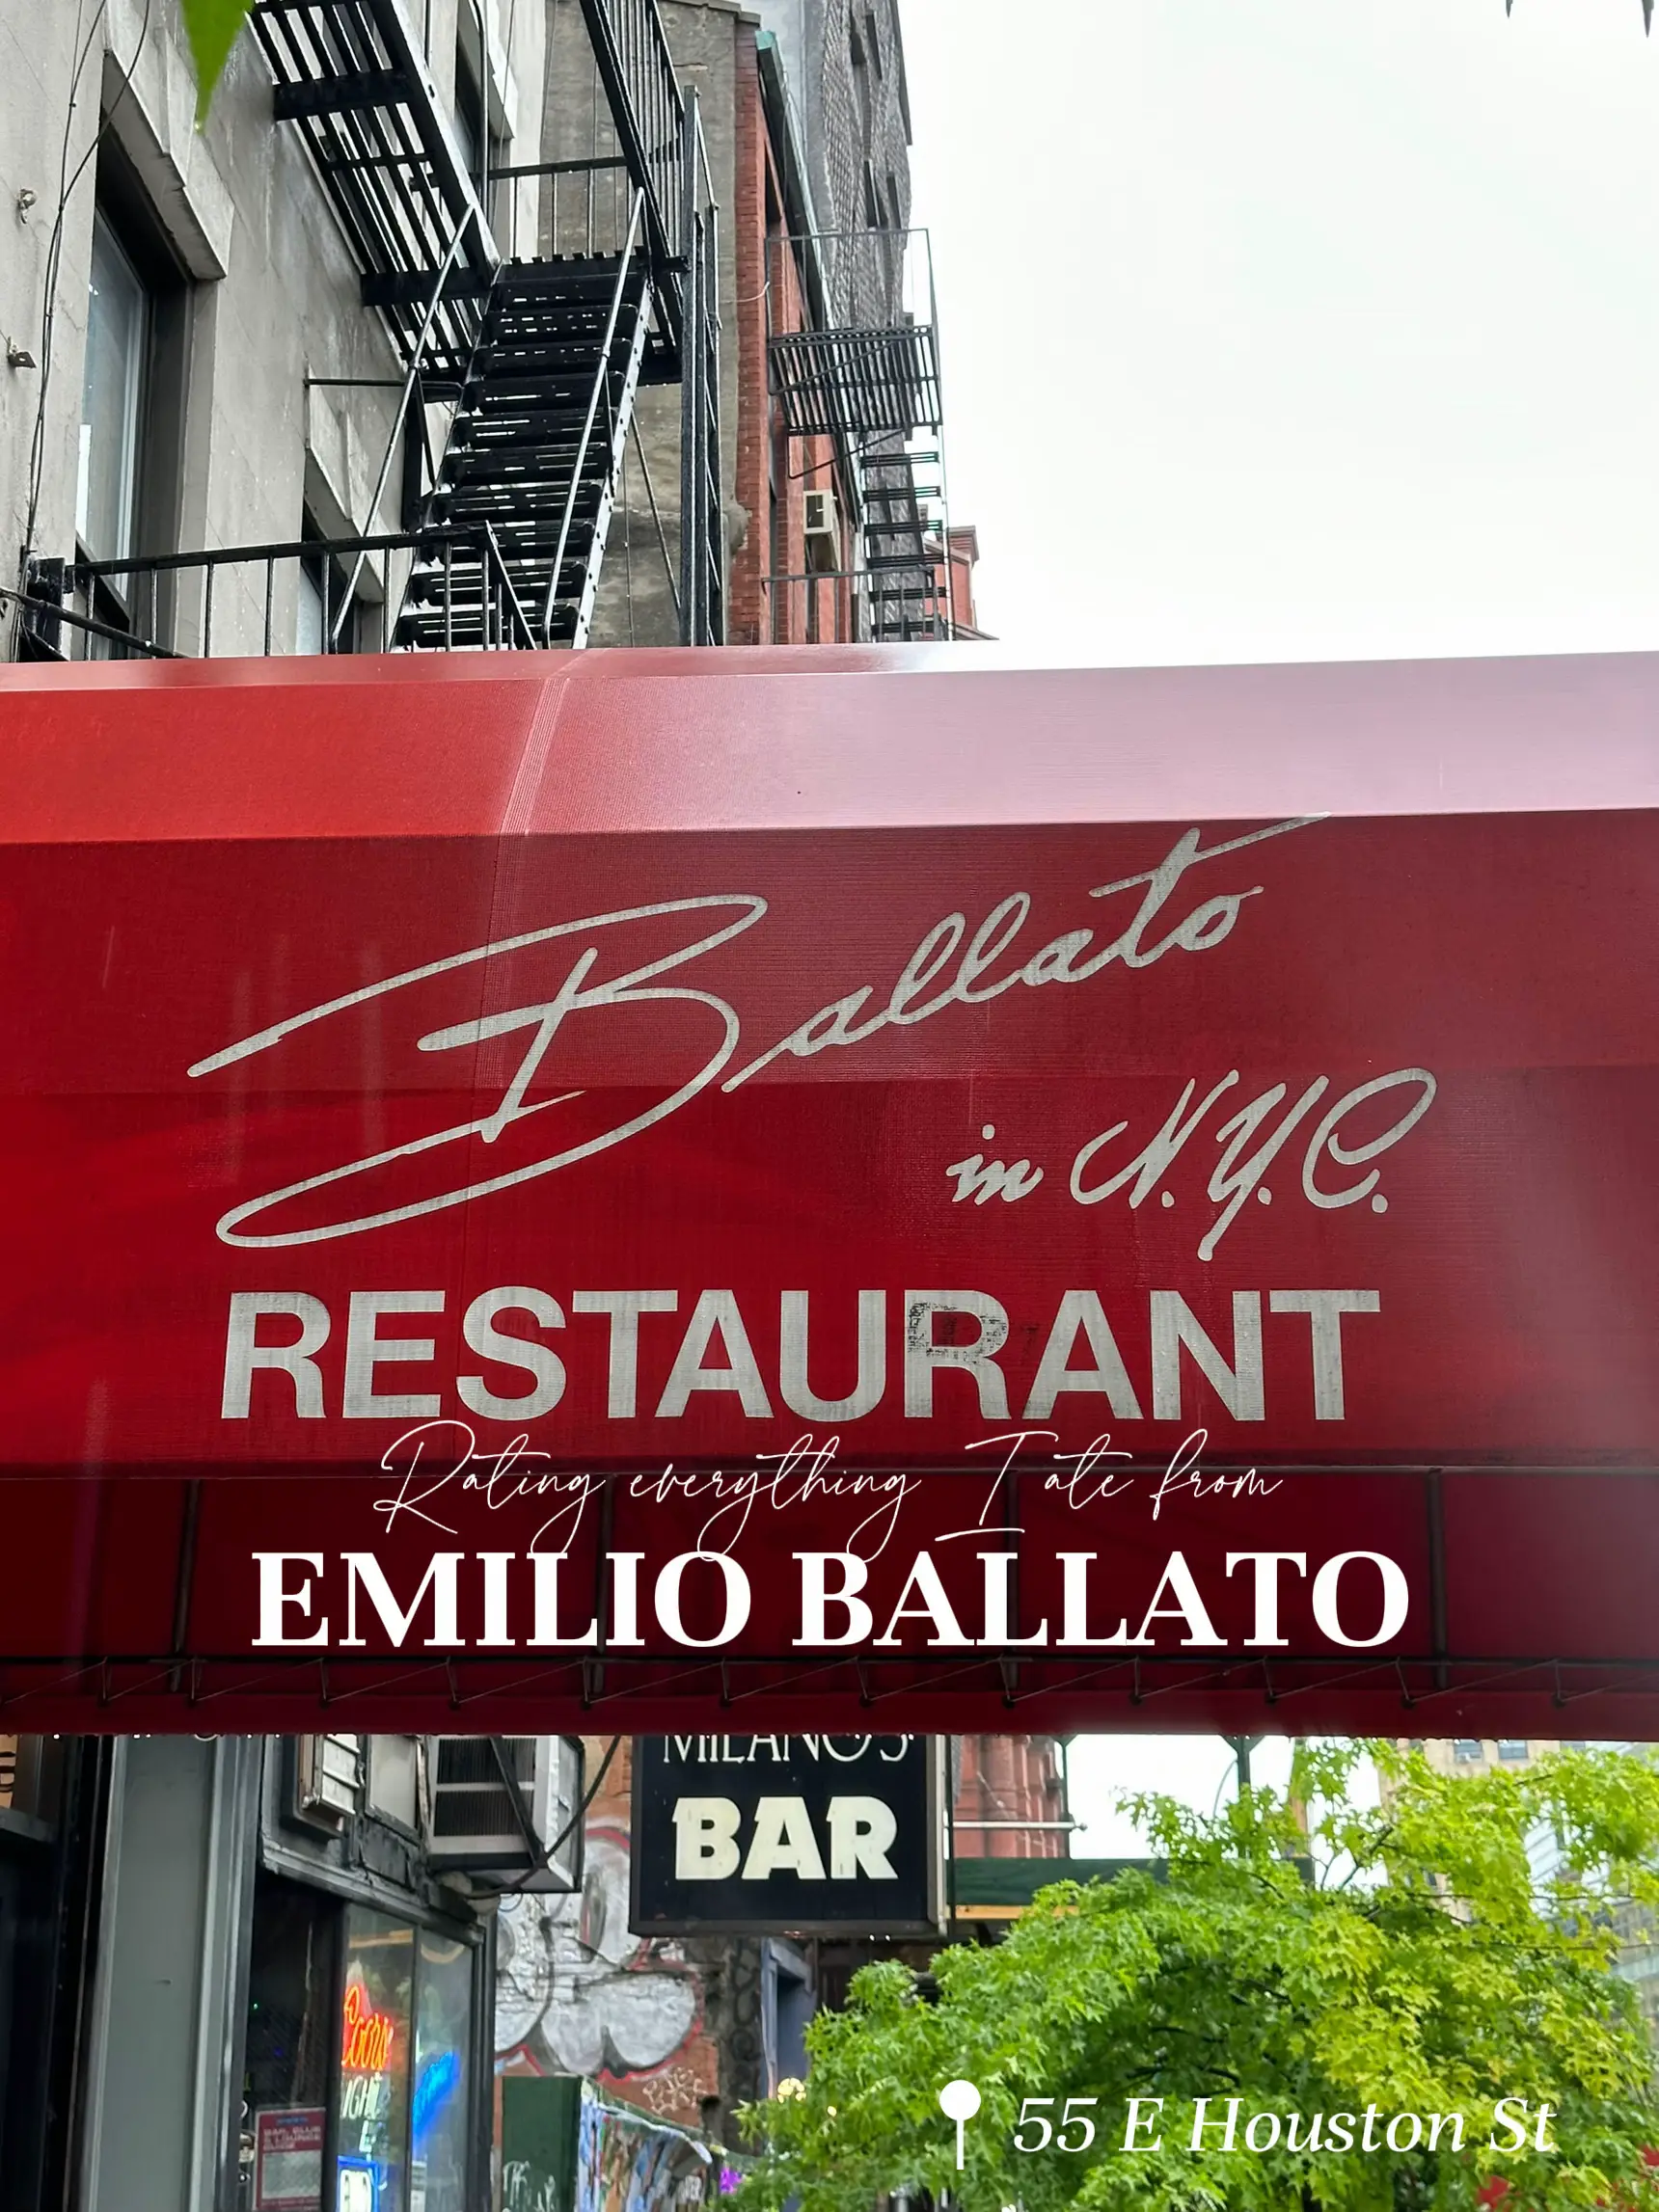 Rating everything I ate at Emilio Ballatos 's images